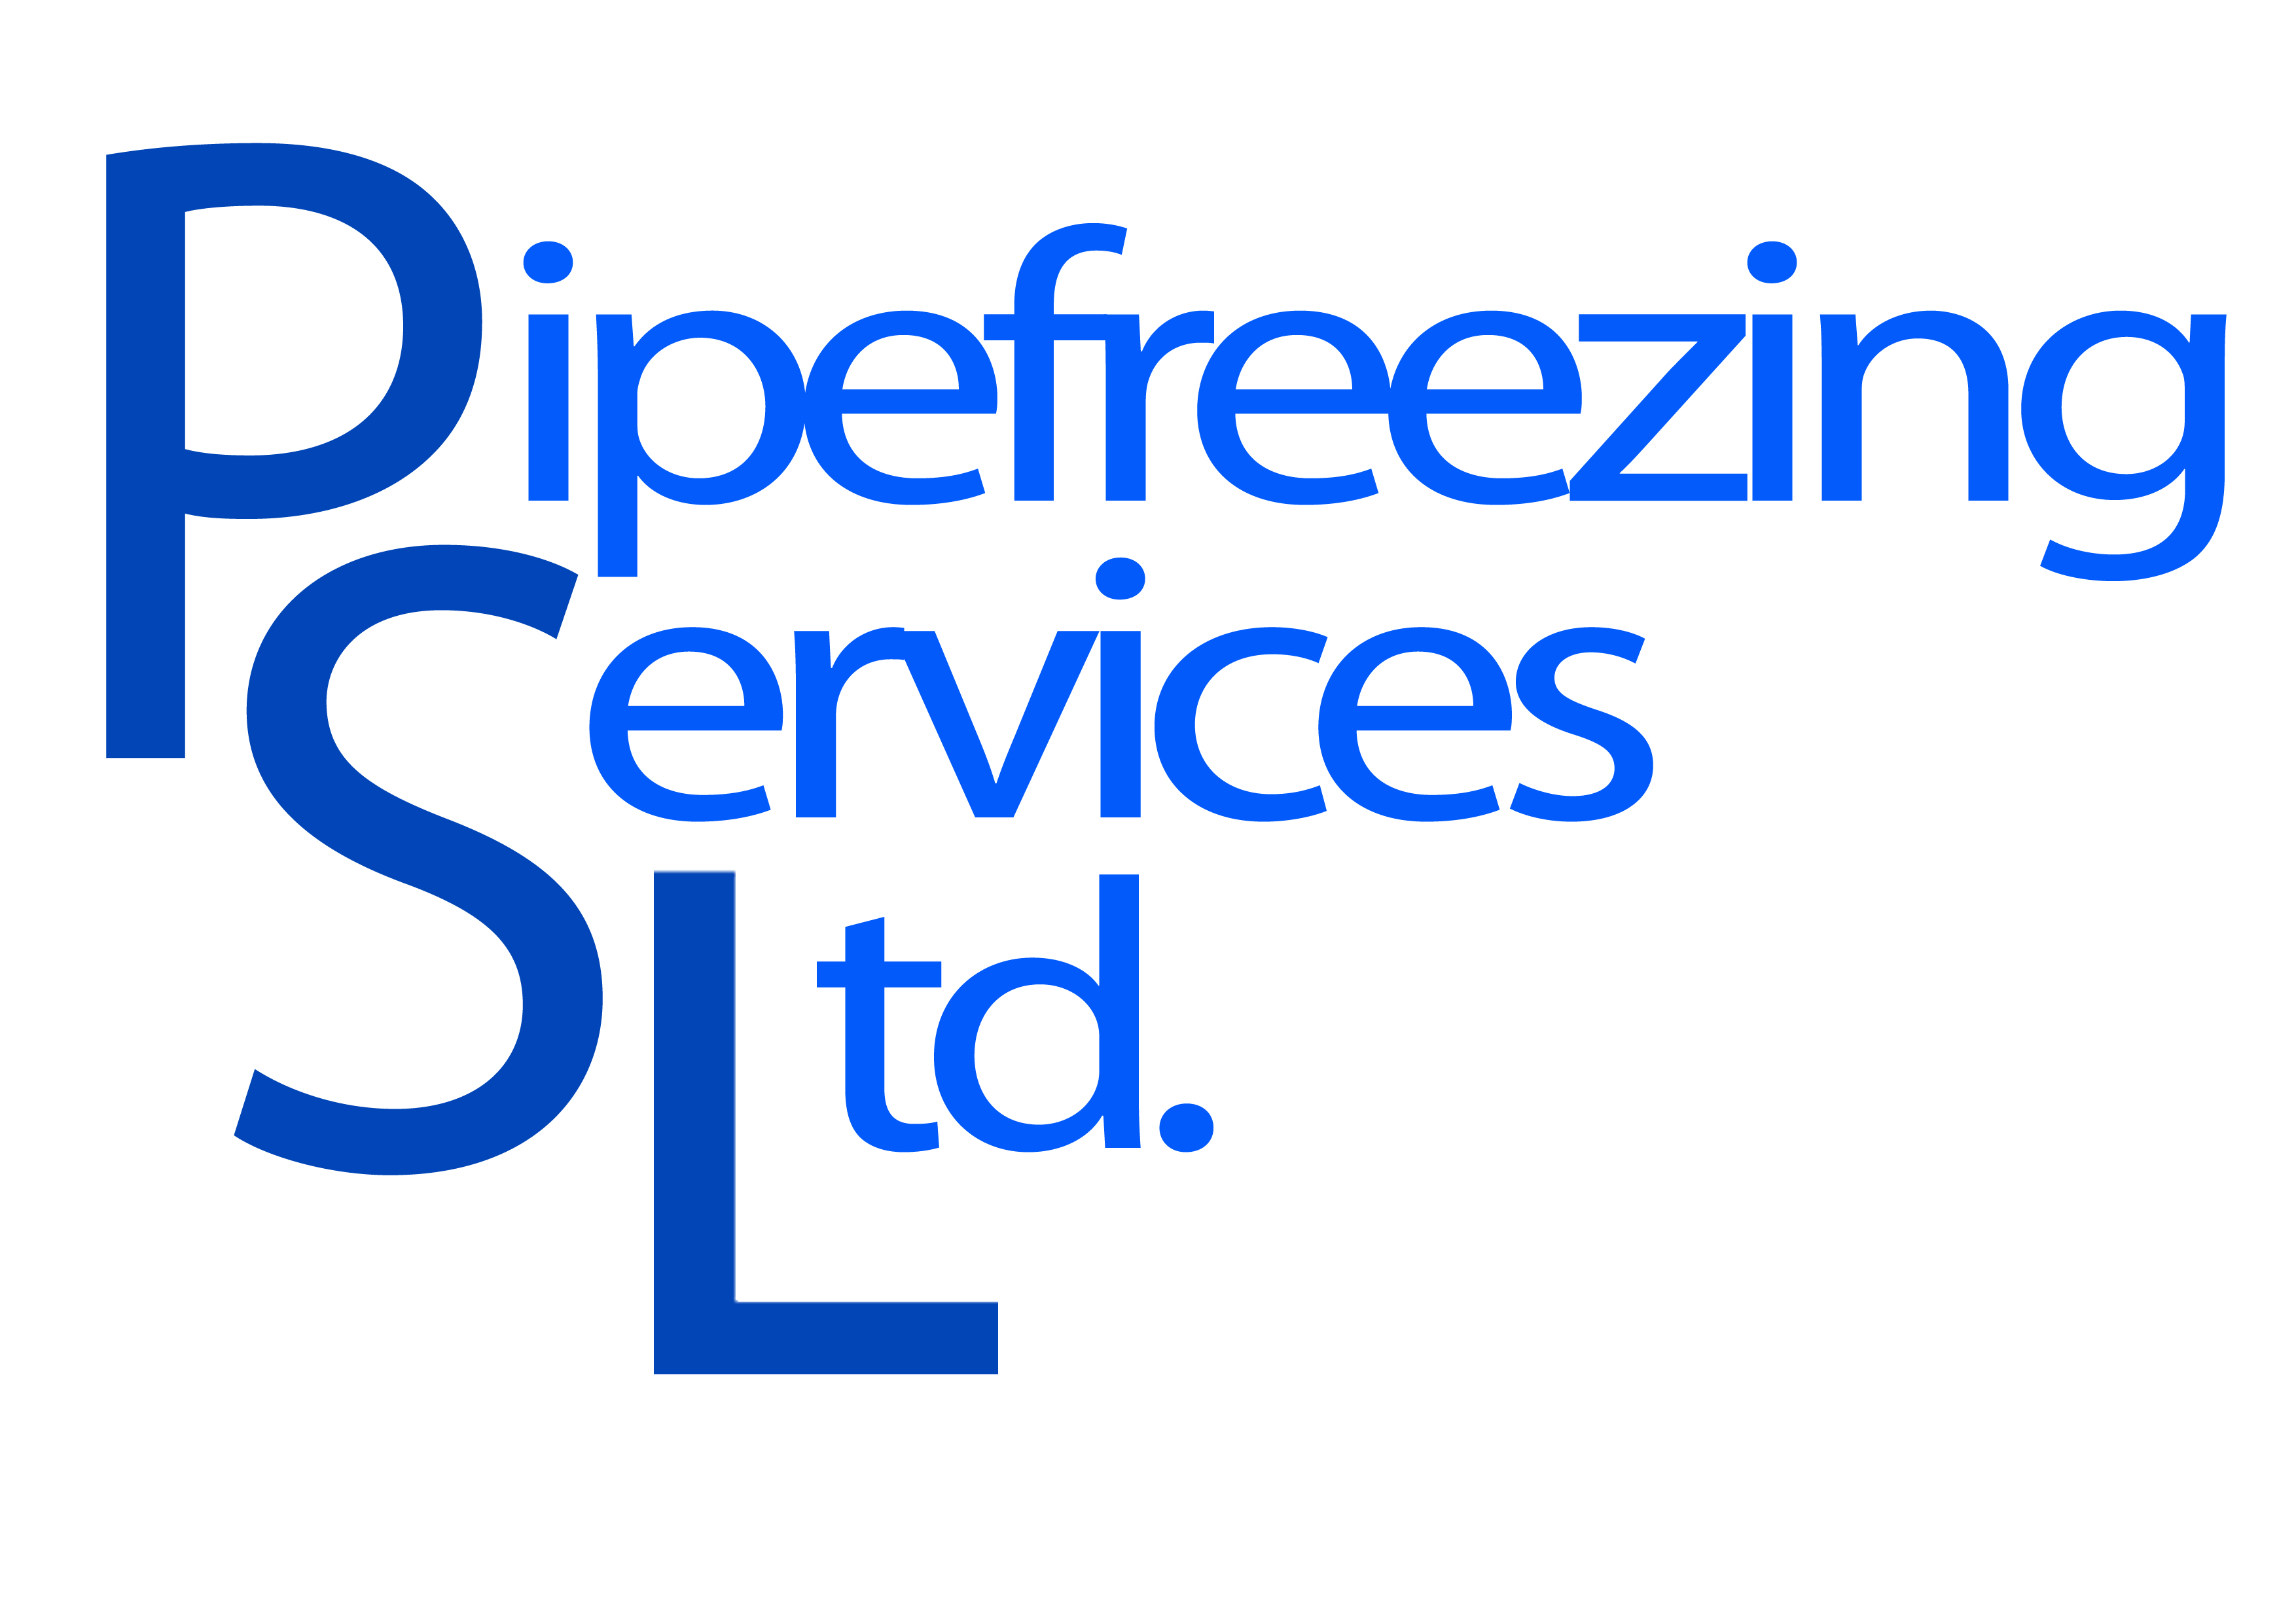 Pipefreezing Services Ltd.